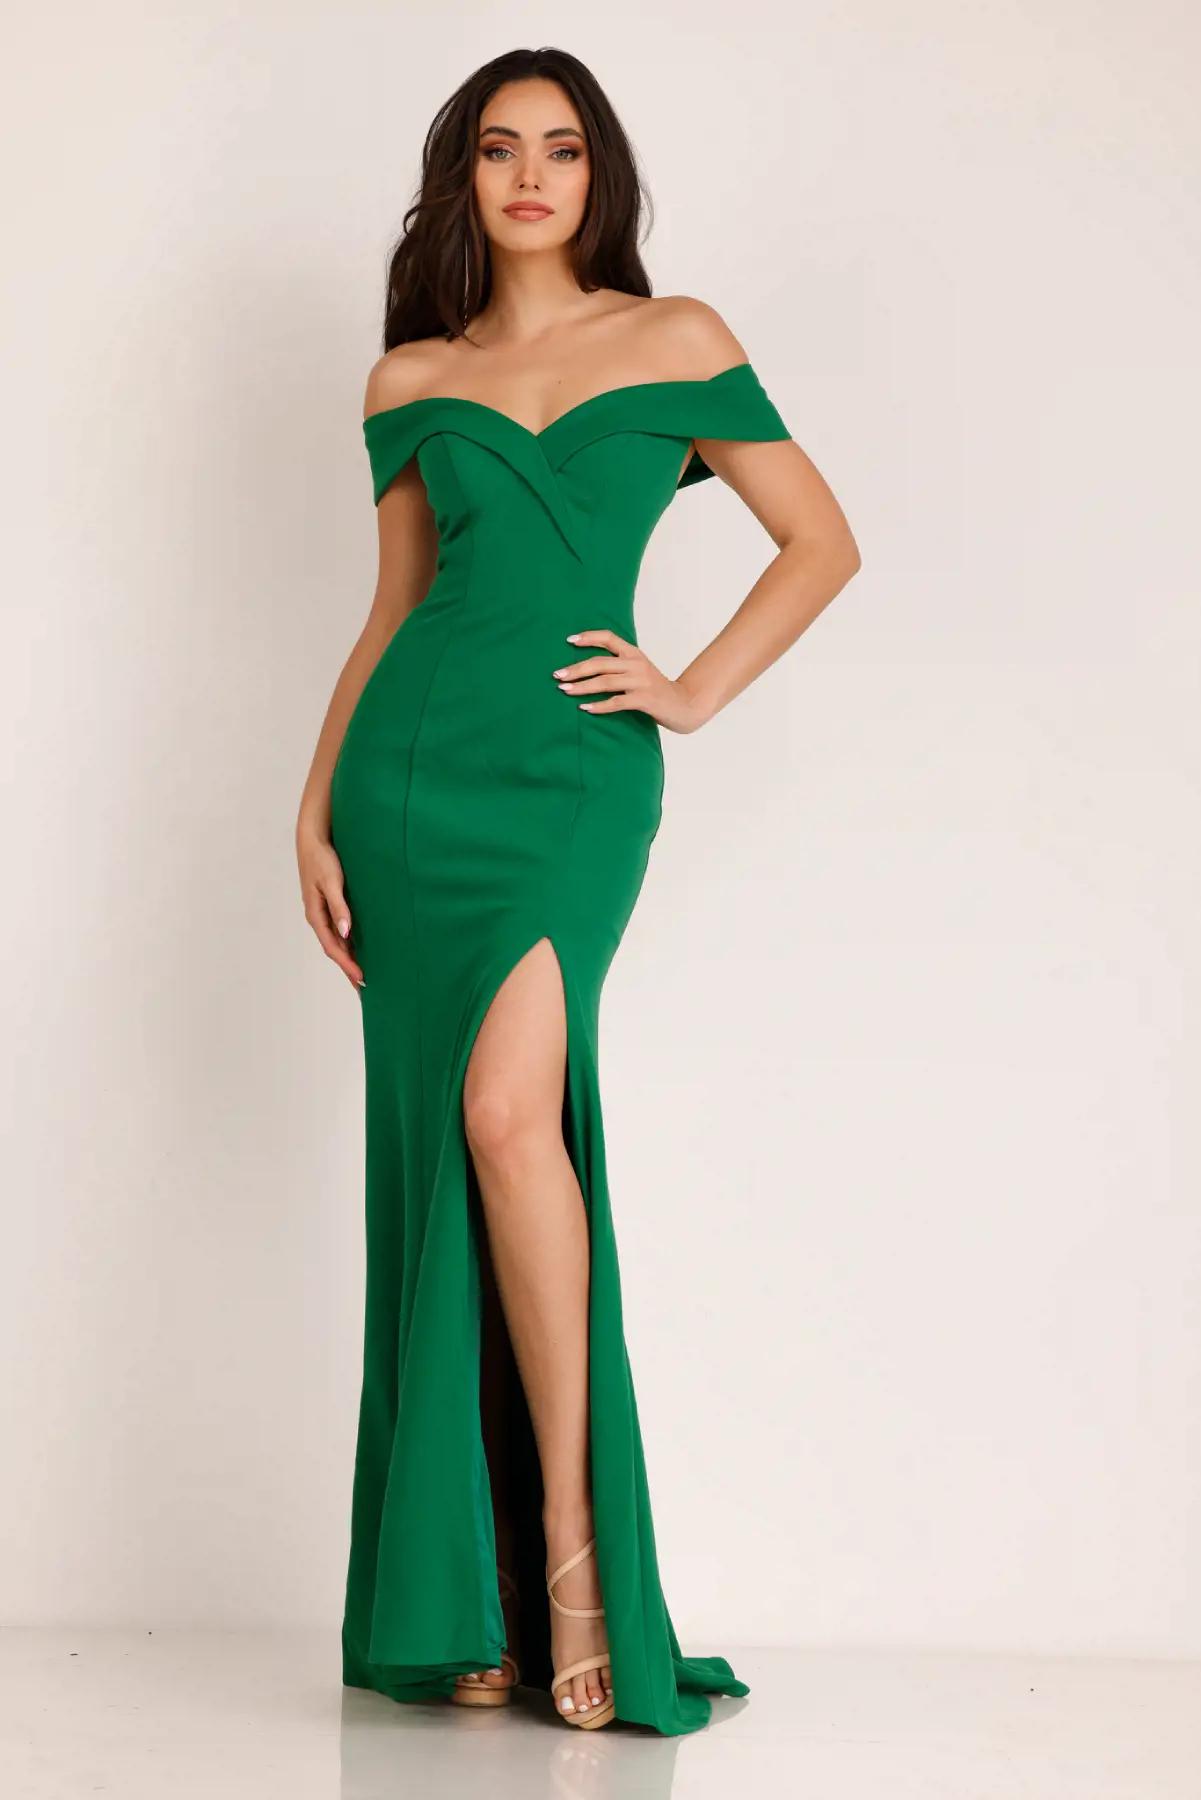 Model wearing an Abby Paris FW green gown